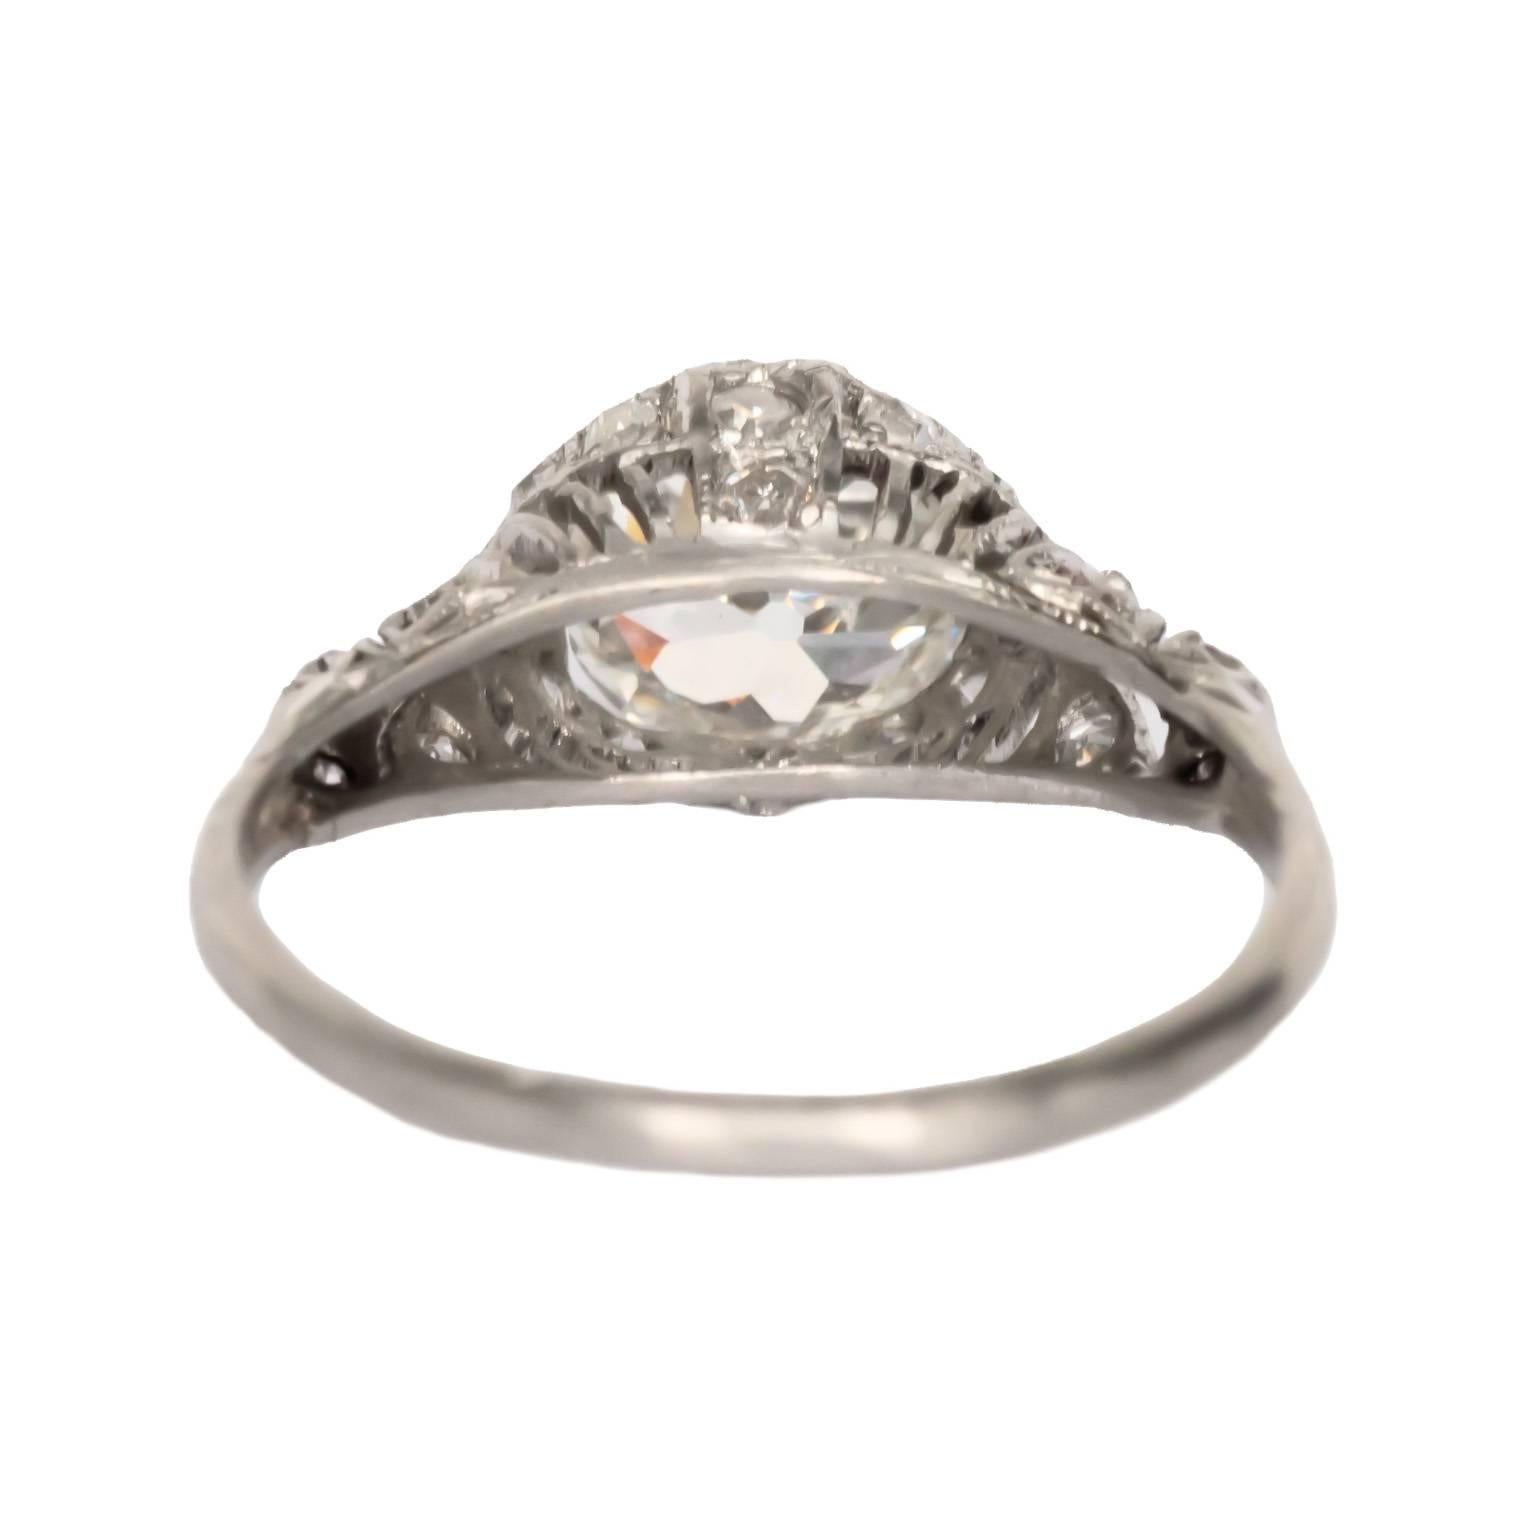 Edwardian Gia Certified 1.16 Carat Diamond Platinum Engagement Ring For Sale